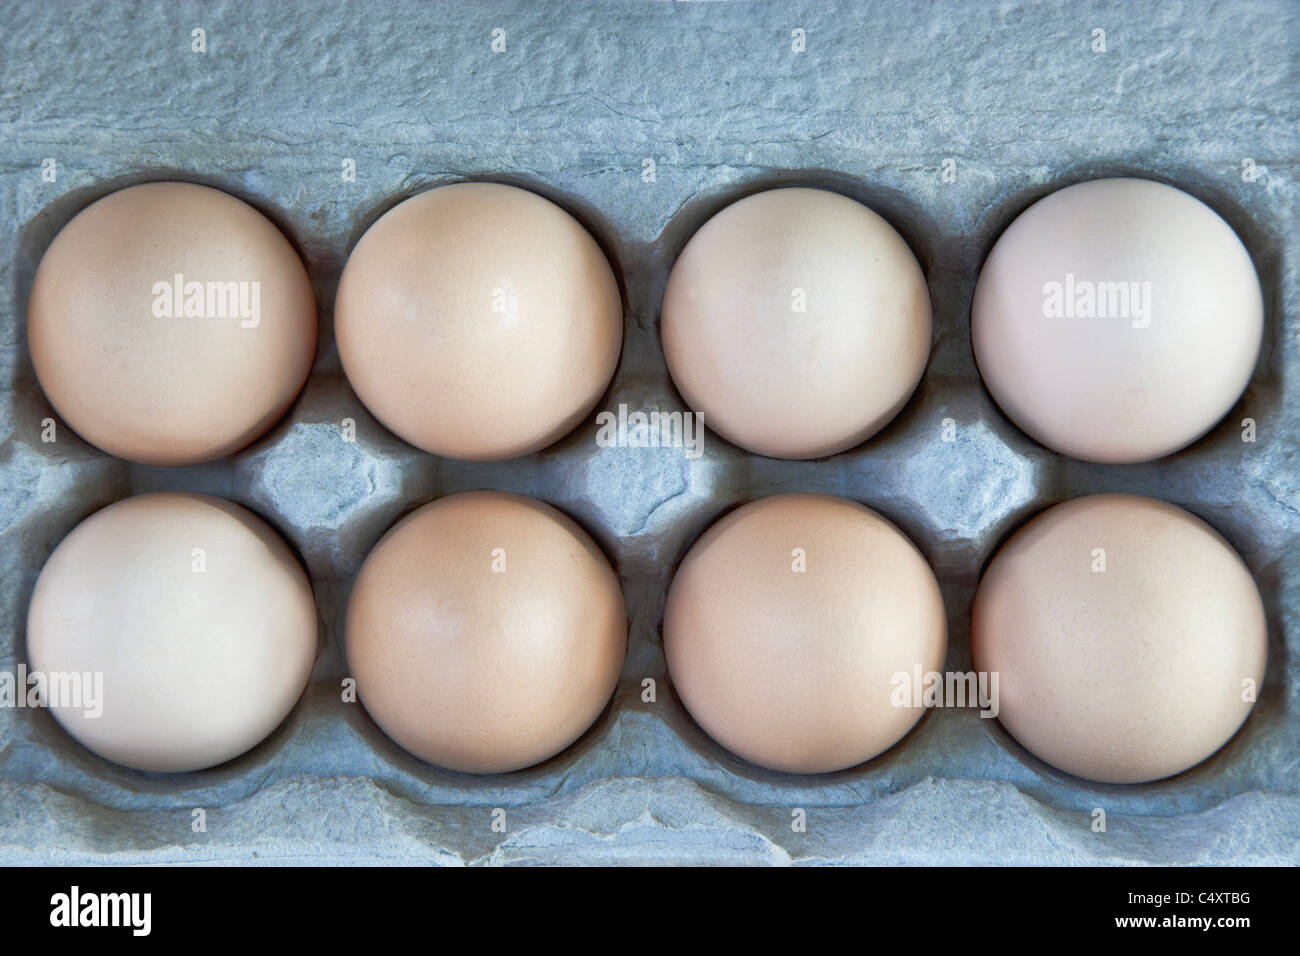 Brown 'chicken' eggs in carton, Stock Photo